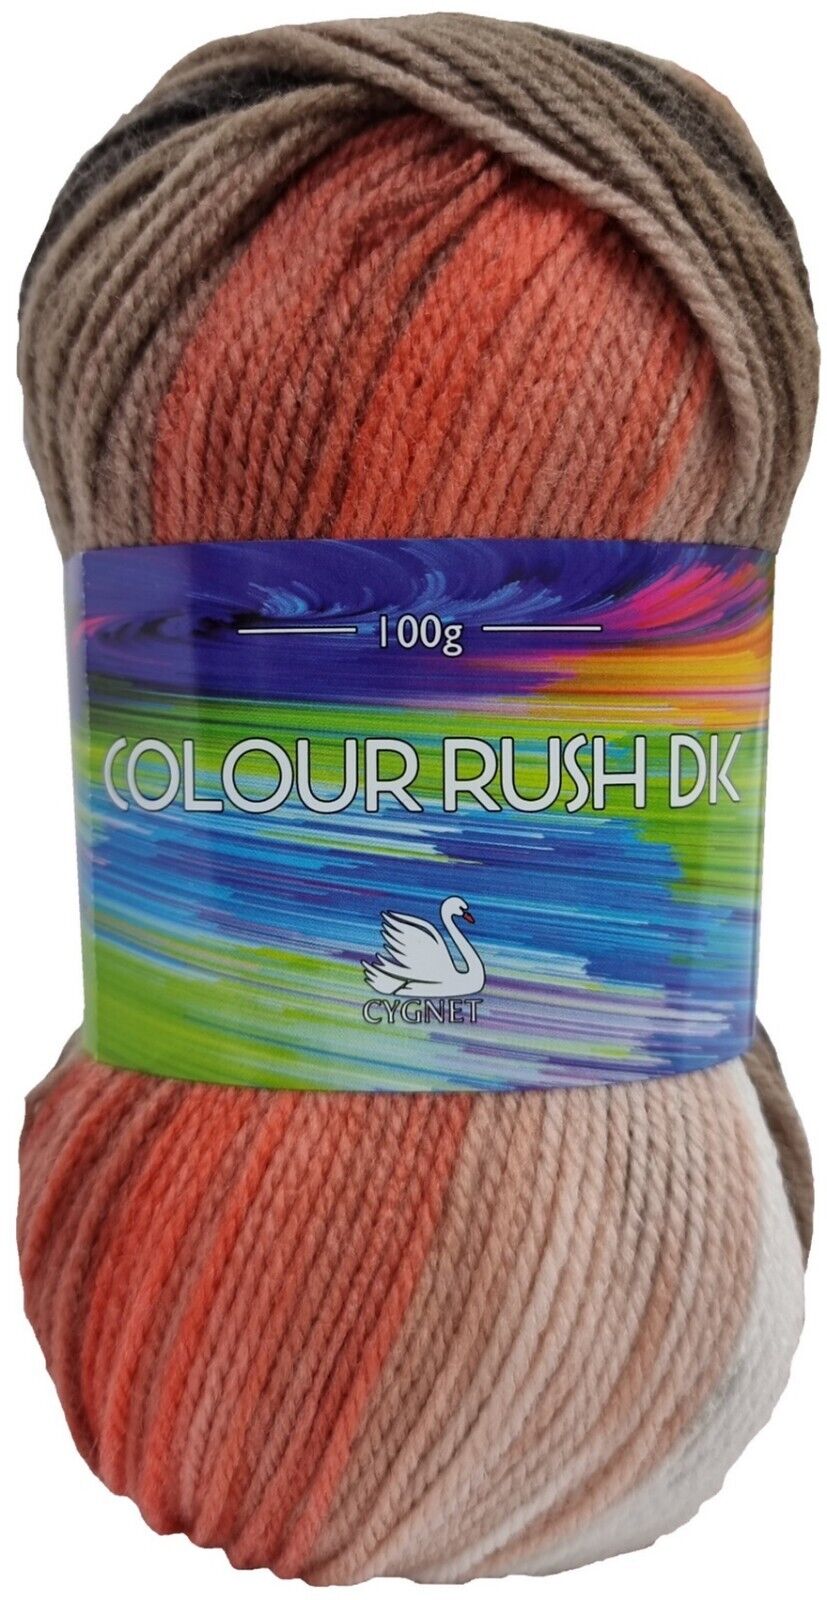 Cygnet COLOUR RUSH DK Knitting Yarn / Wool - 100g Double Knit Ball - Pomegranate